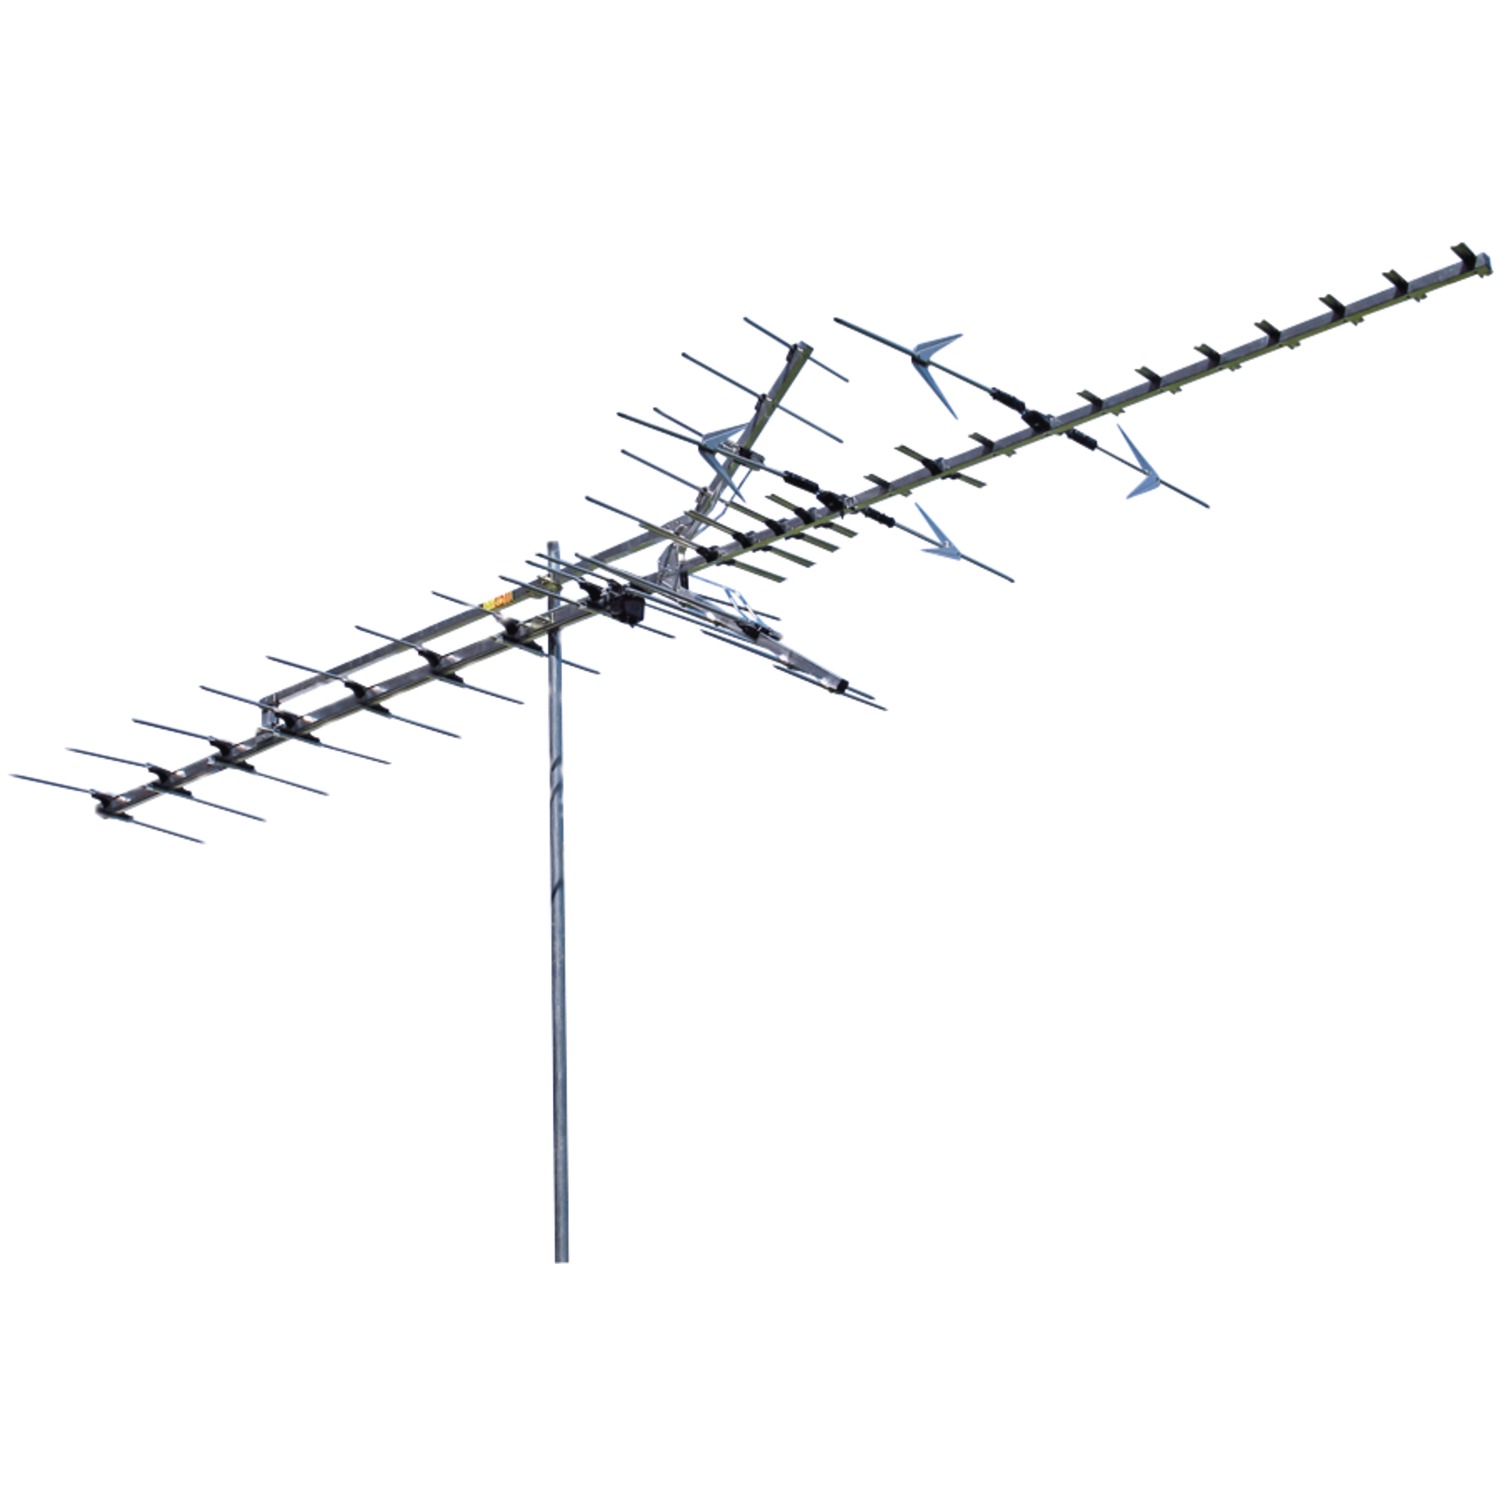 Winegard Hd7698p Platinum Series Hdtv High-band Vhf/uhf Deep Fringe Antenna (65-mile Range) - image 2 of 2